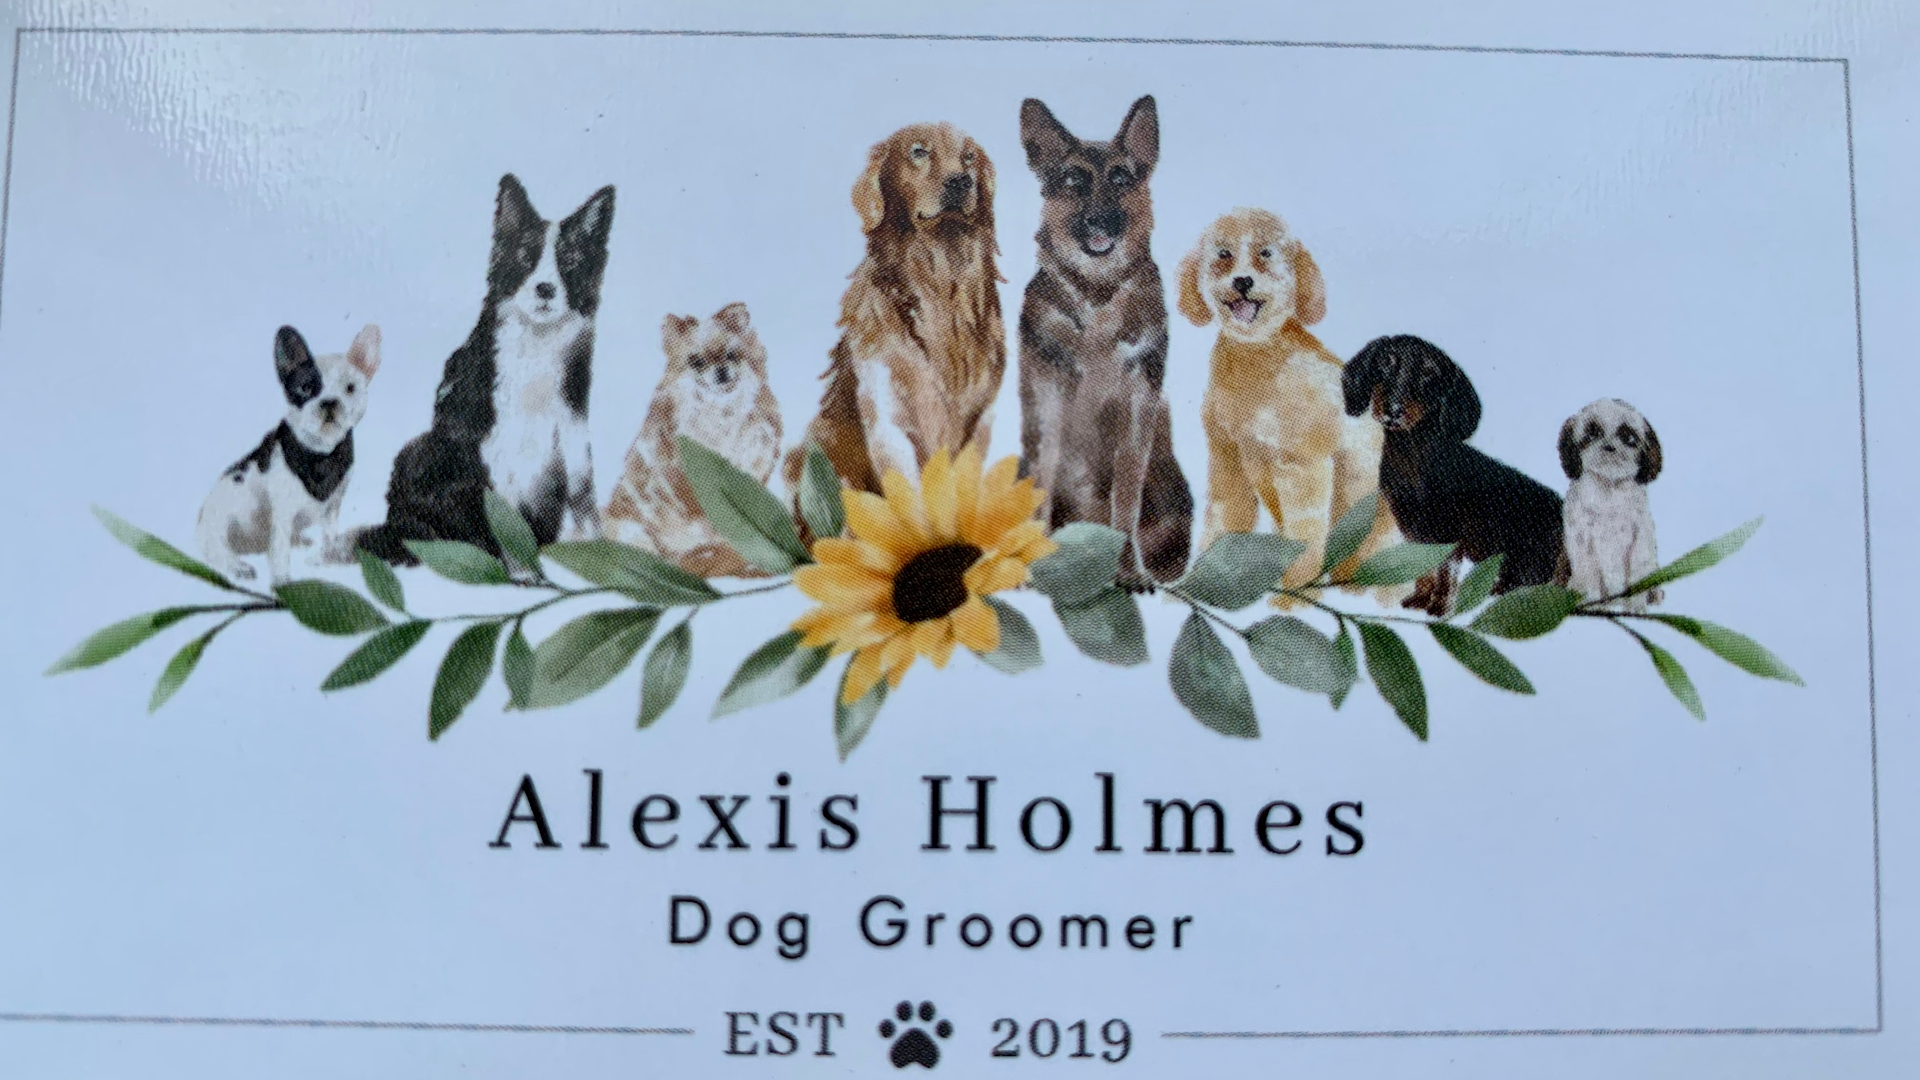 Alexis Holmes Dog Groomer LLC